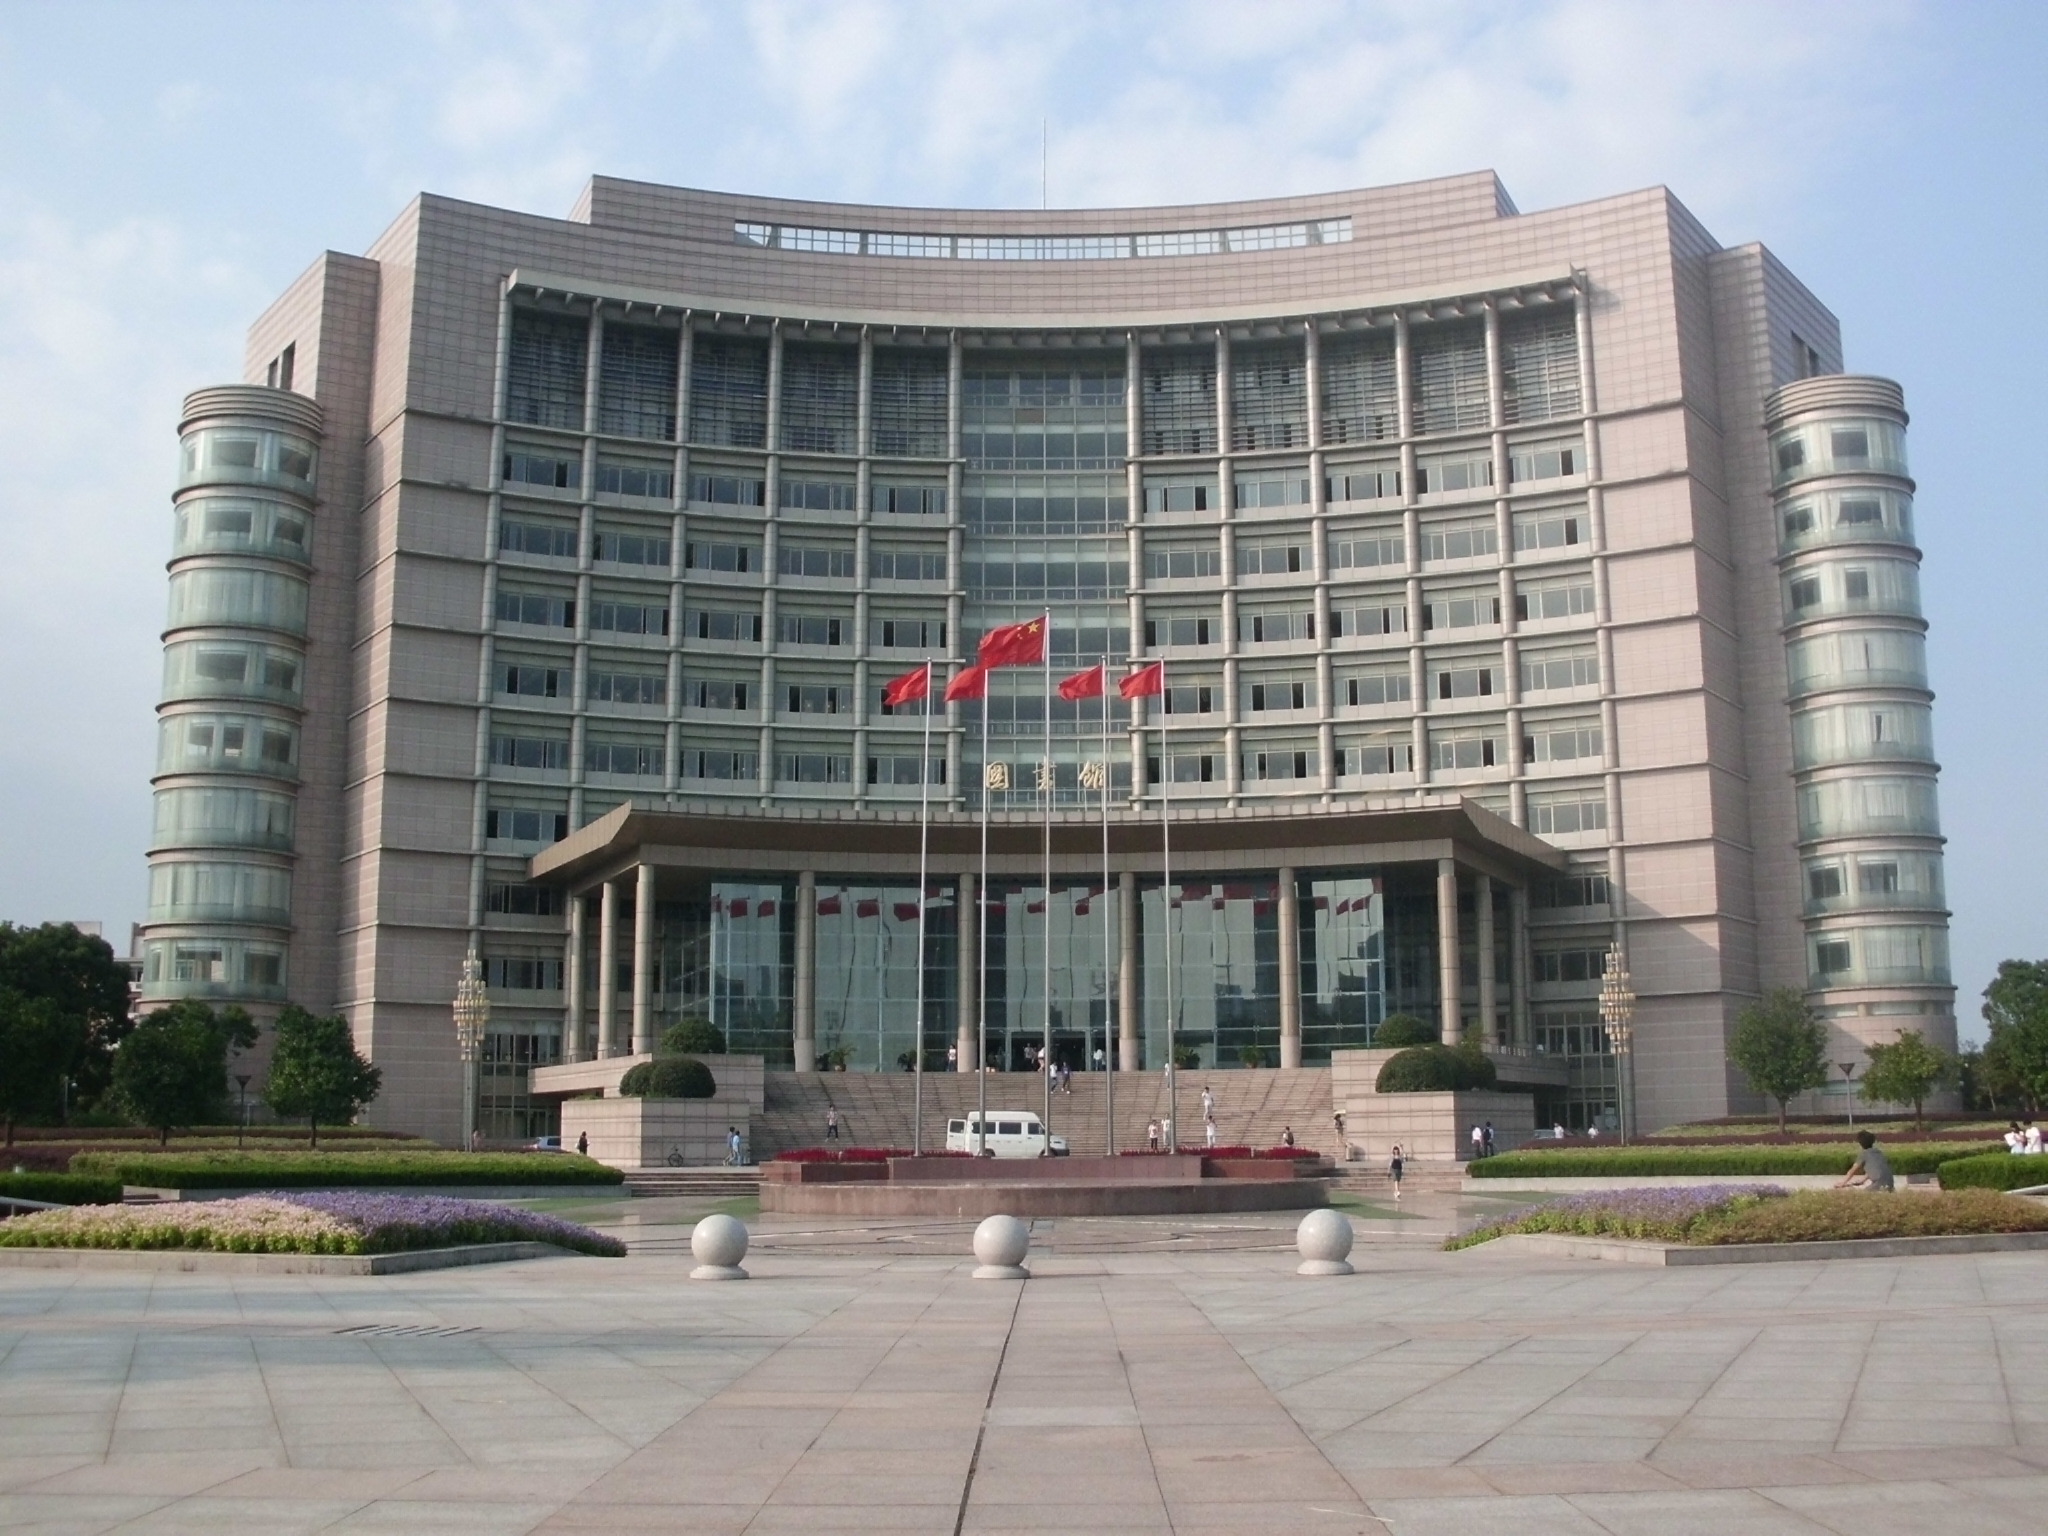 Zhejiang University of Science & Technology the main image